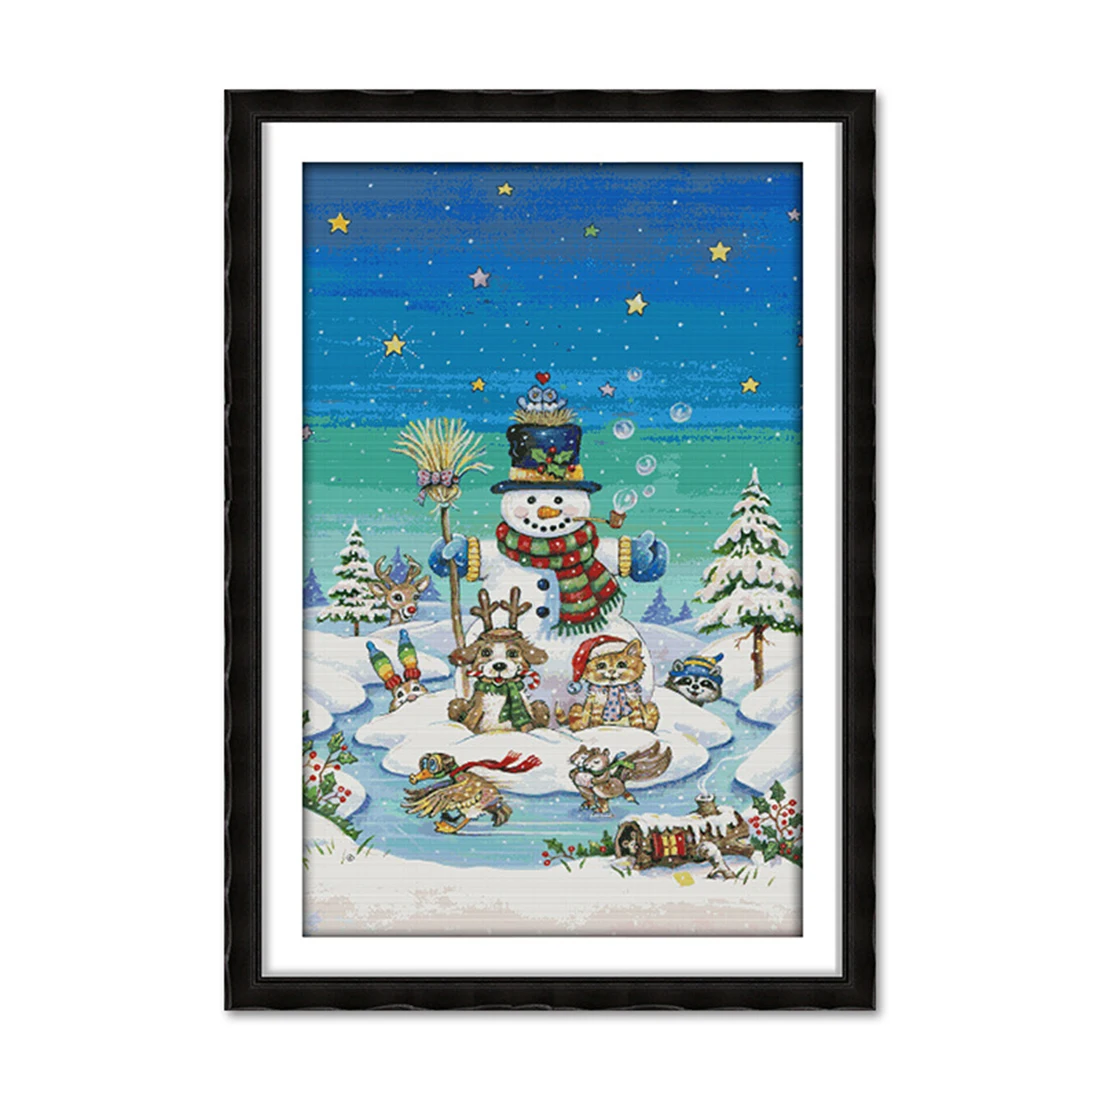 

91 x 136cm 11CT 3 Strands Printing Cross Stitch DIY Decorative Cross-stitch Embroidery Kit (without Frame) - Snowman Landscape